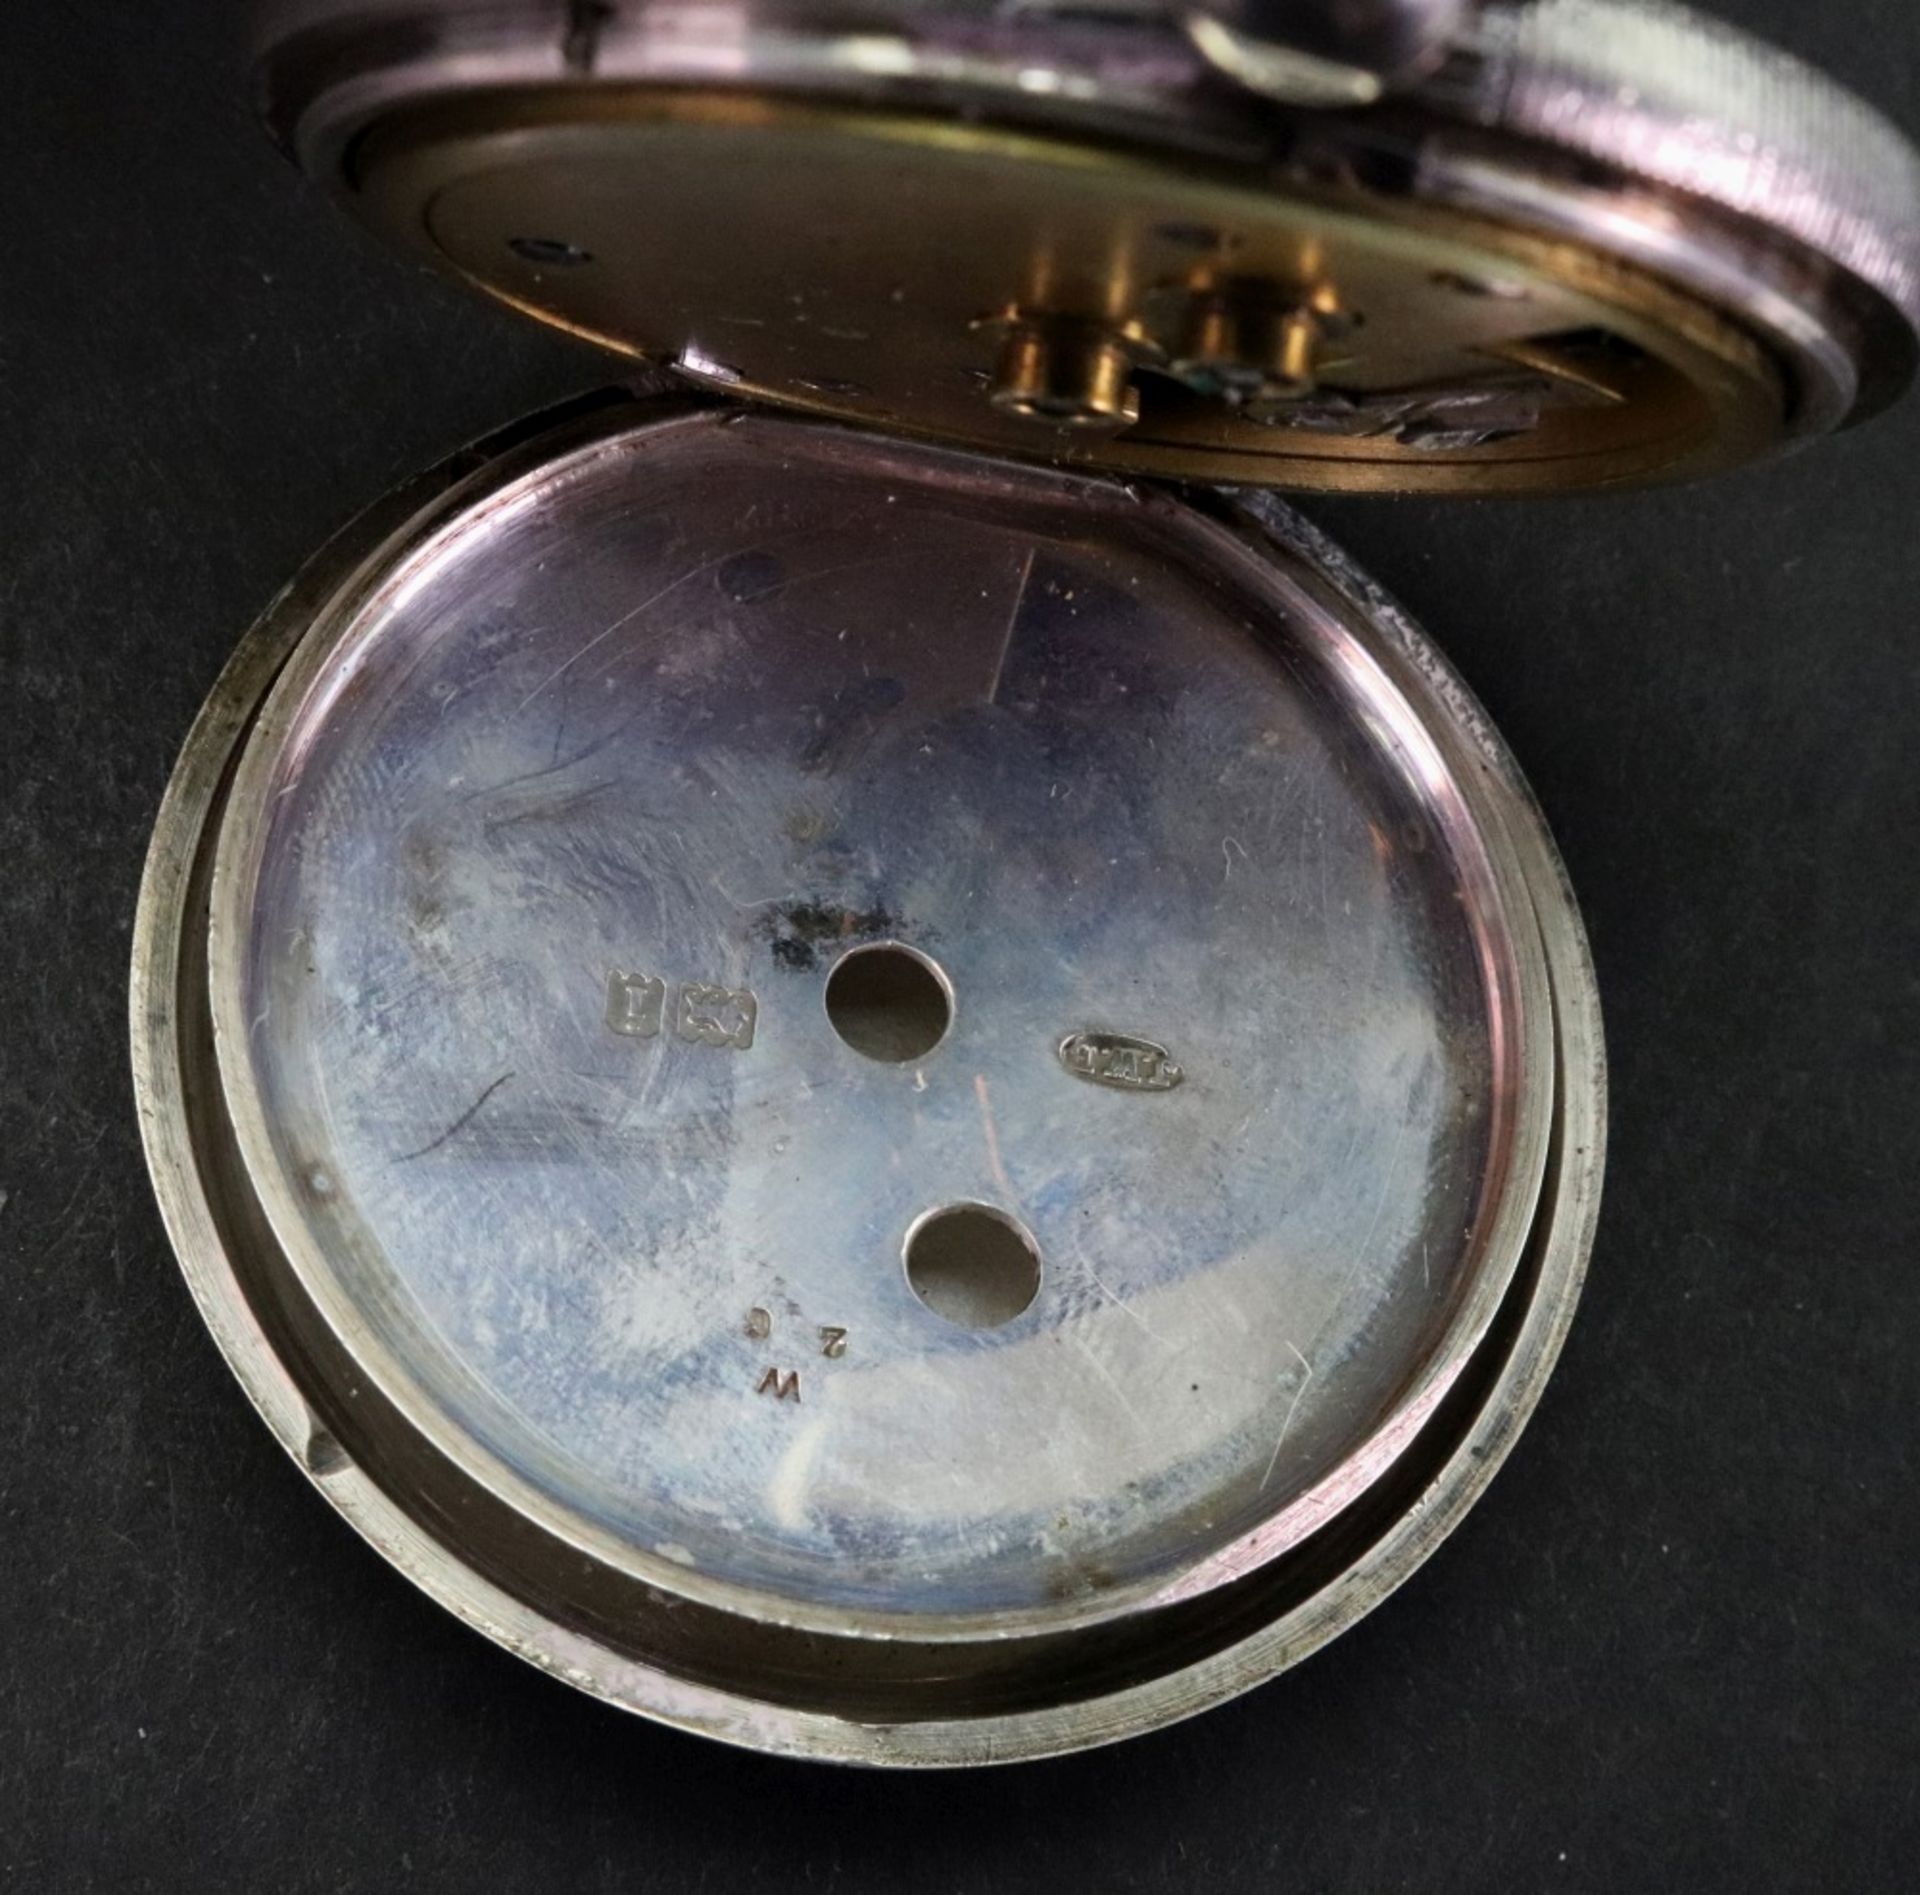 J W Benson; a gentleman's silver cased pocket watch, - Image 3 of 4